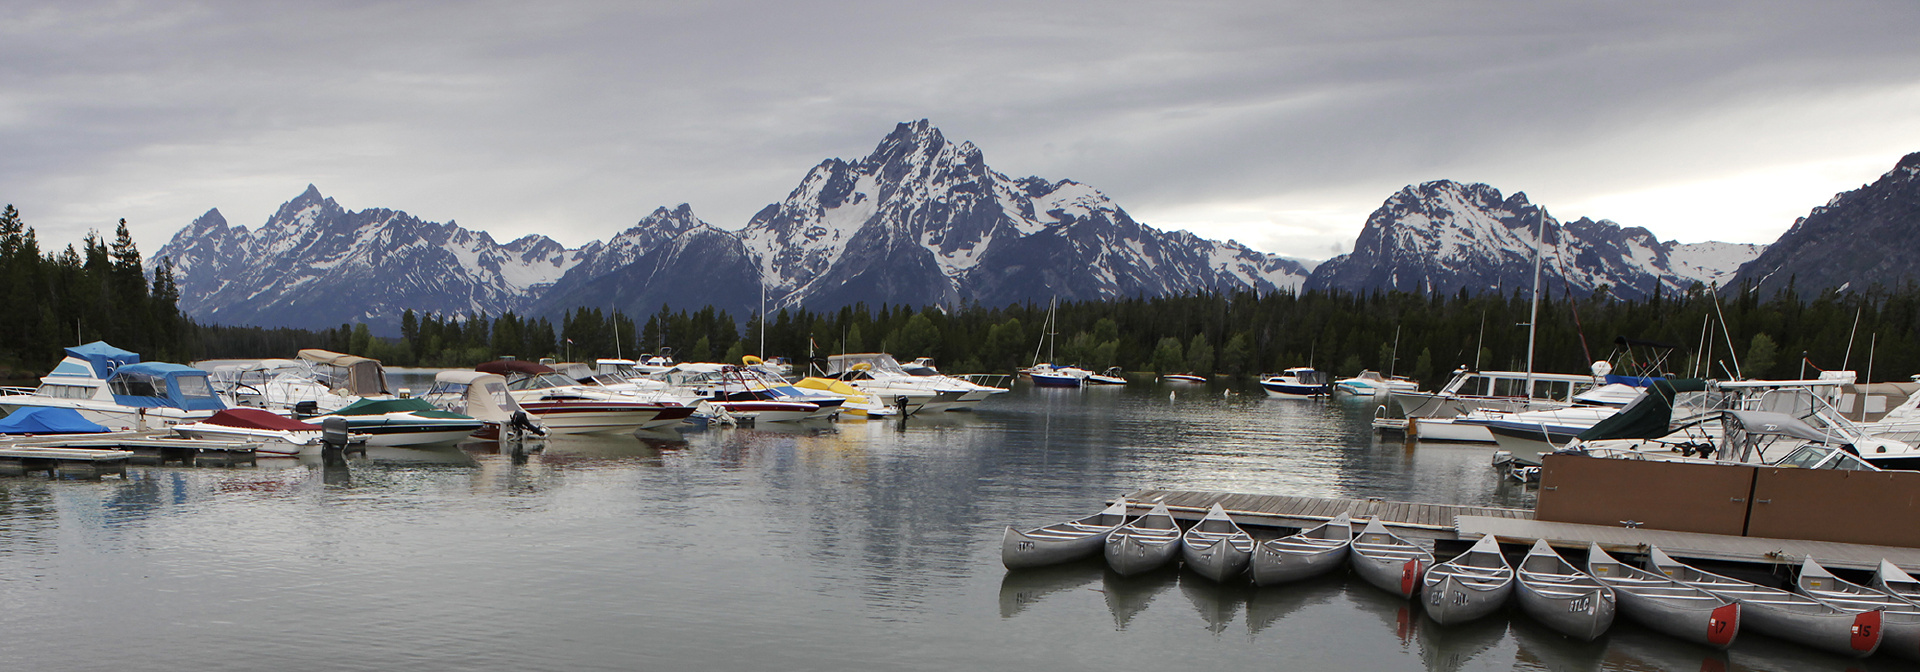 Alaska: The Inside Passage